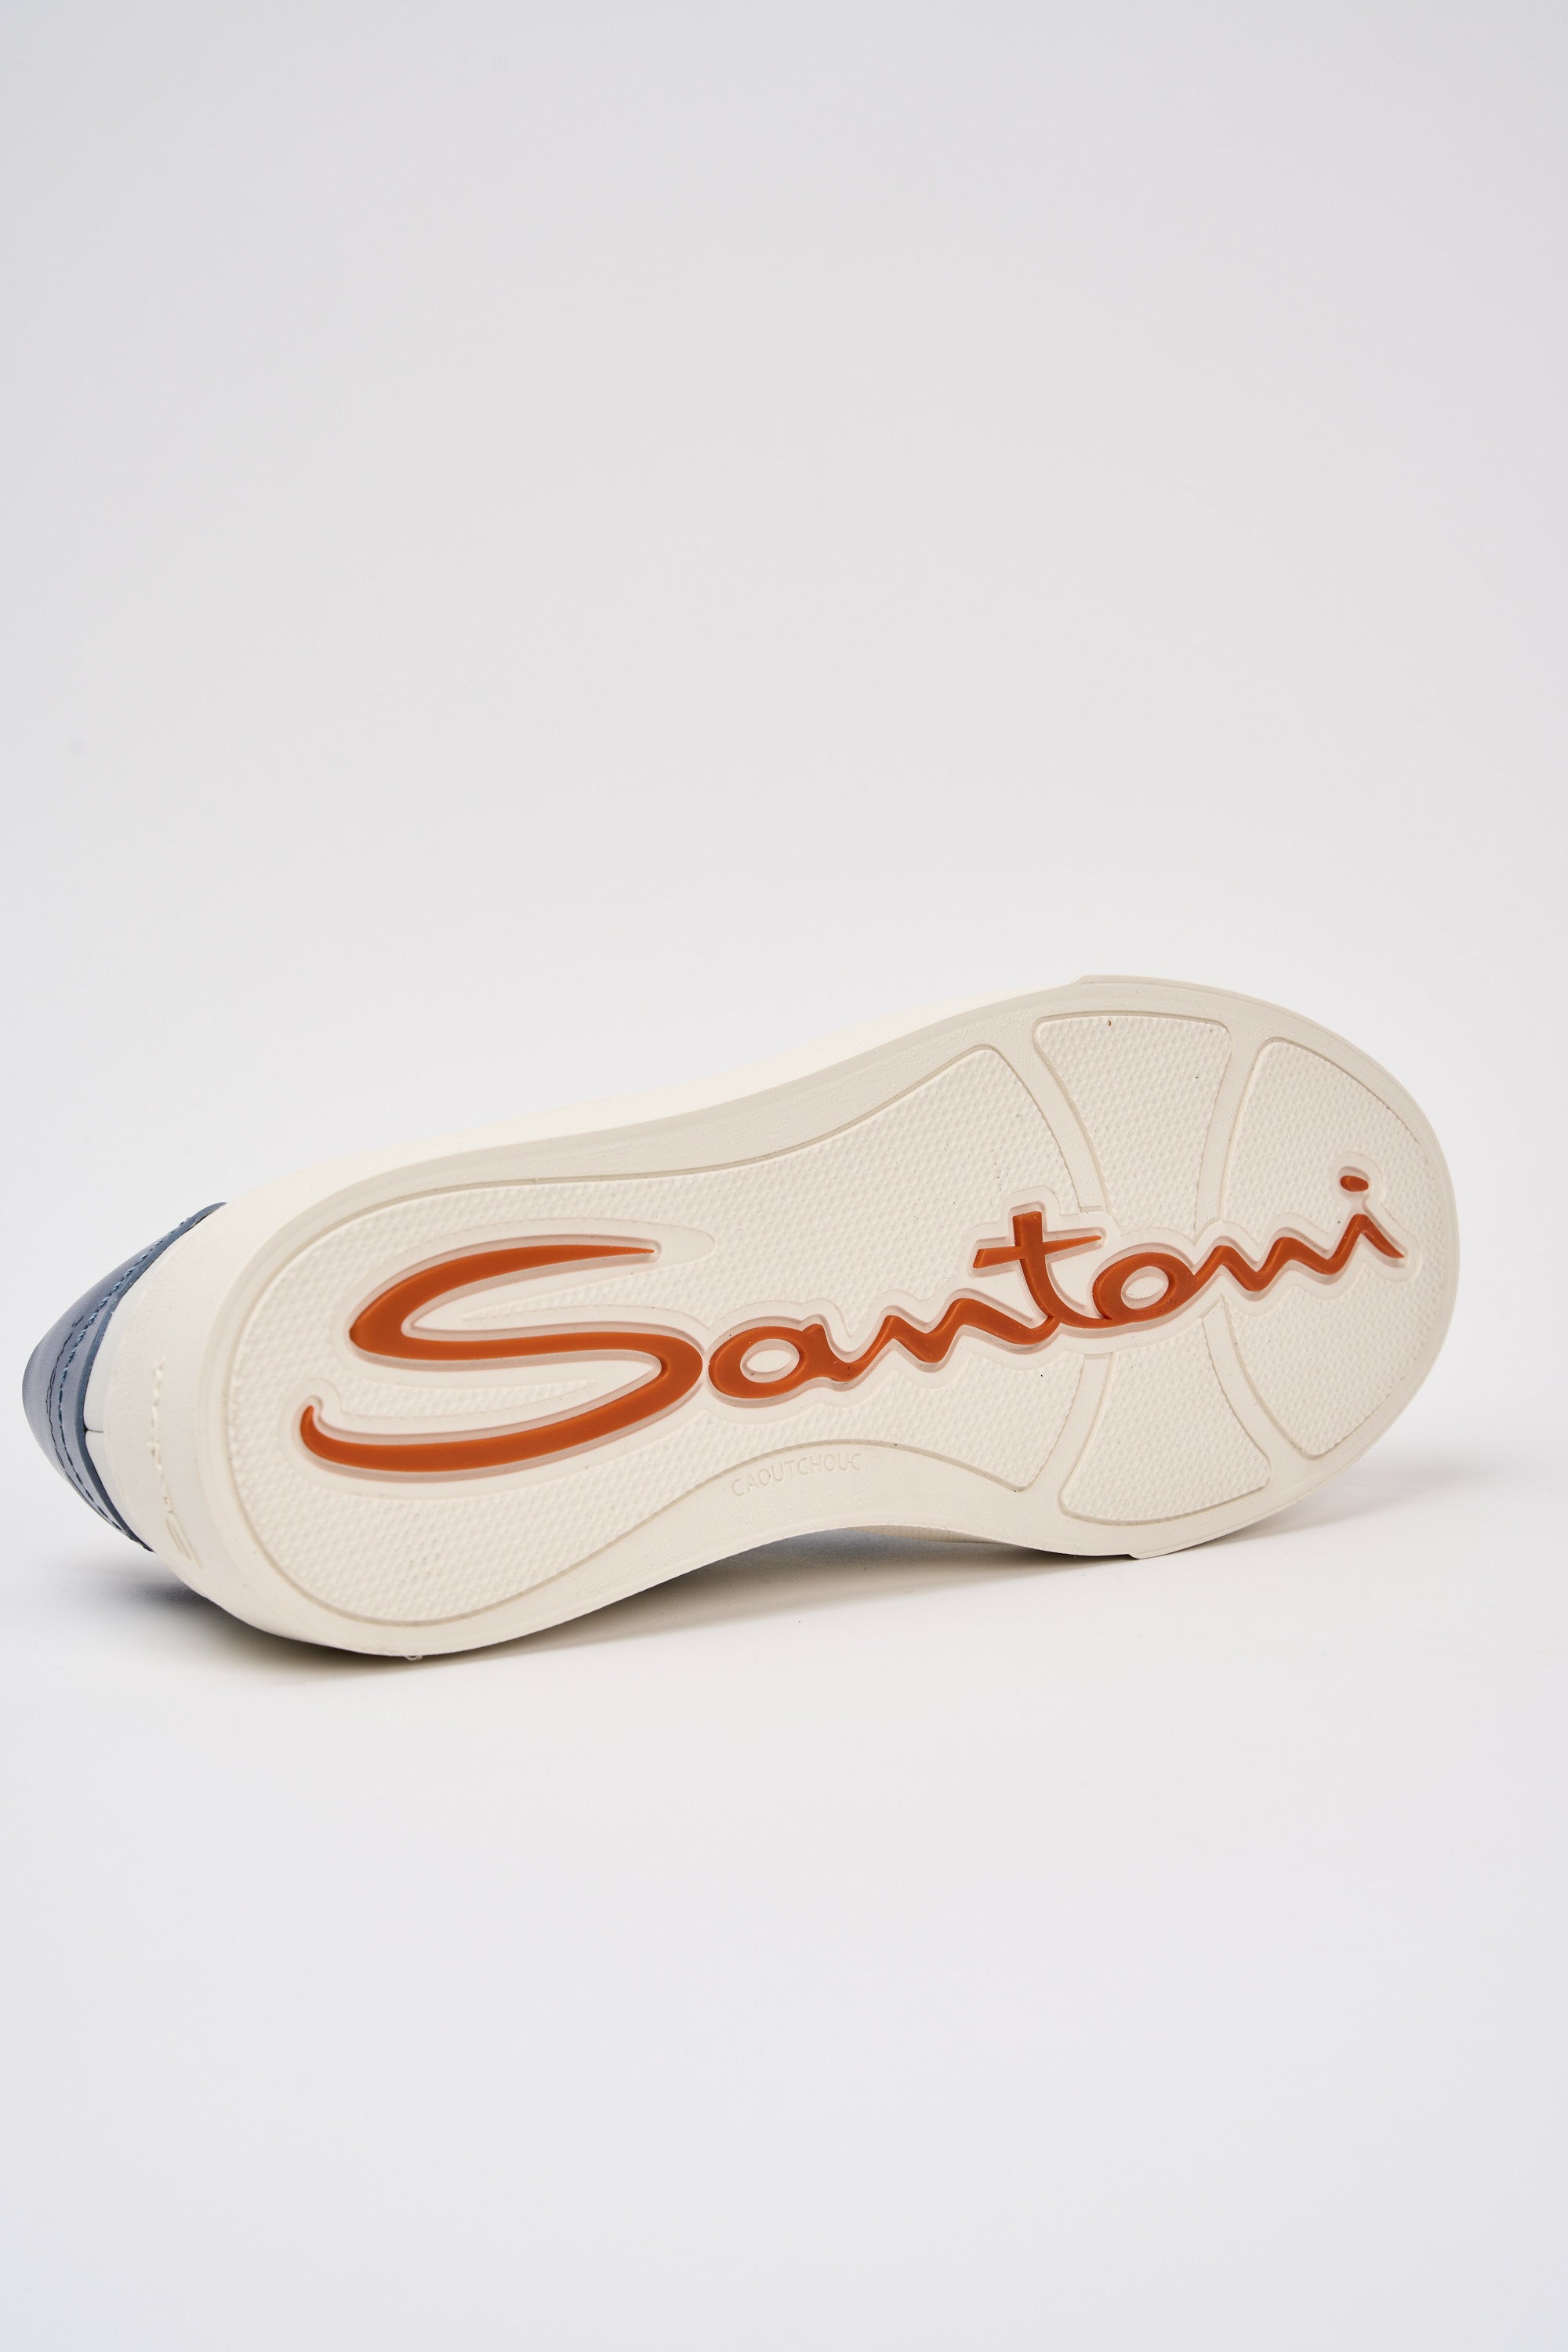 Santoni Sneaker Double Buckle White Leather-5